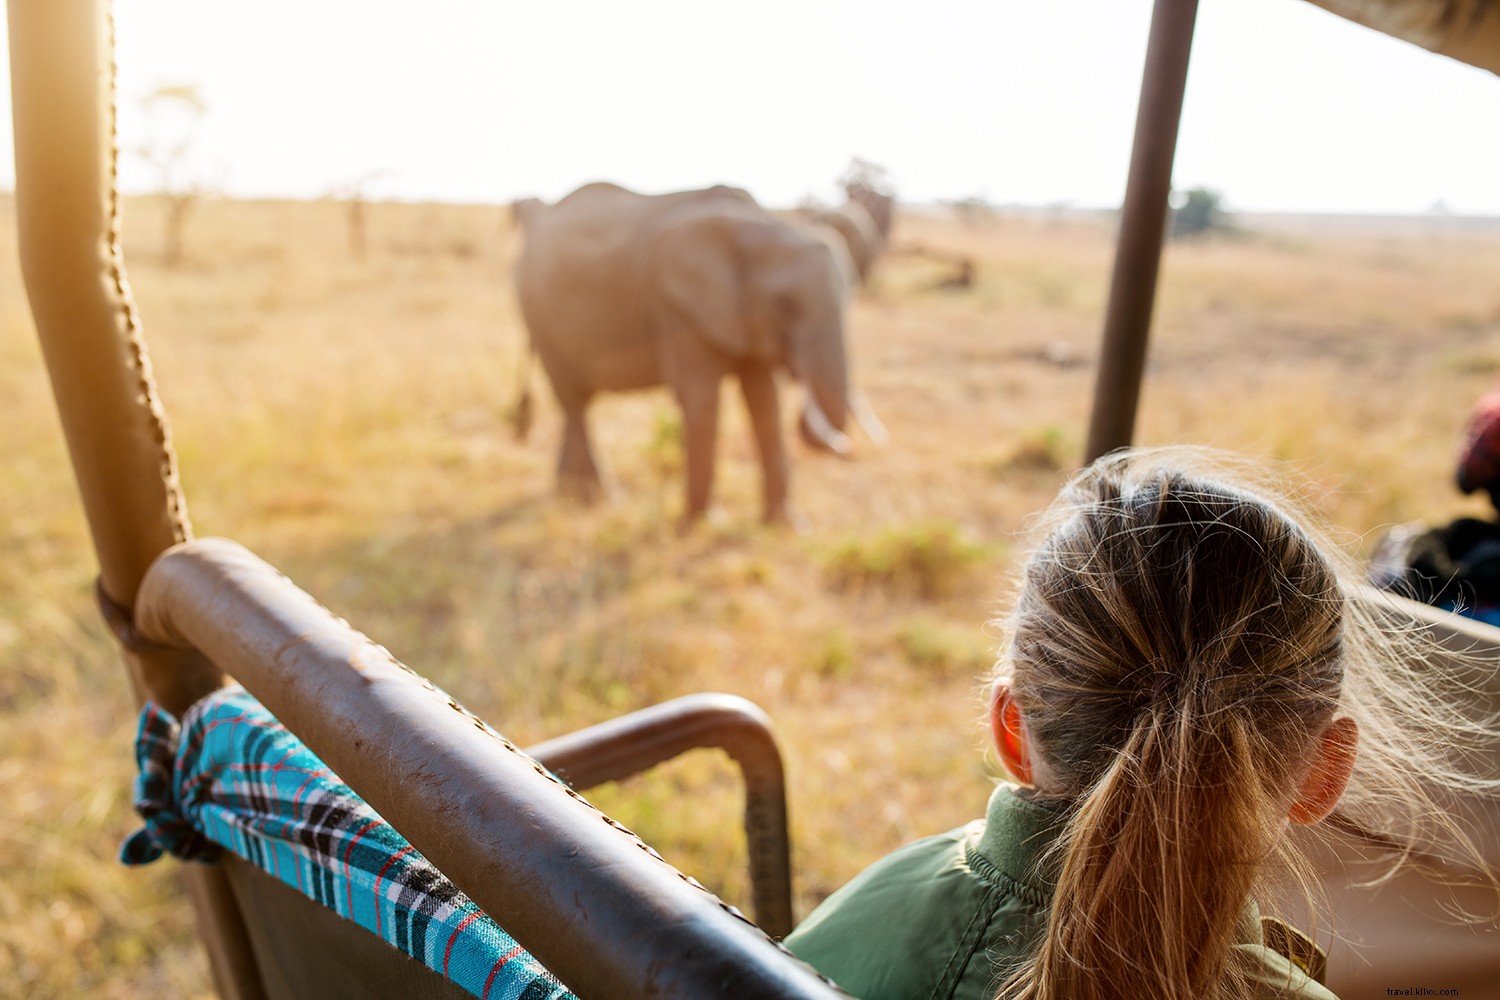 Epic South Africa Safaris:o que saber antes de ir 